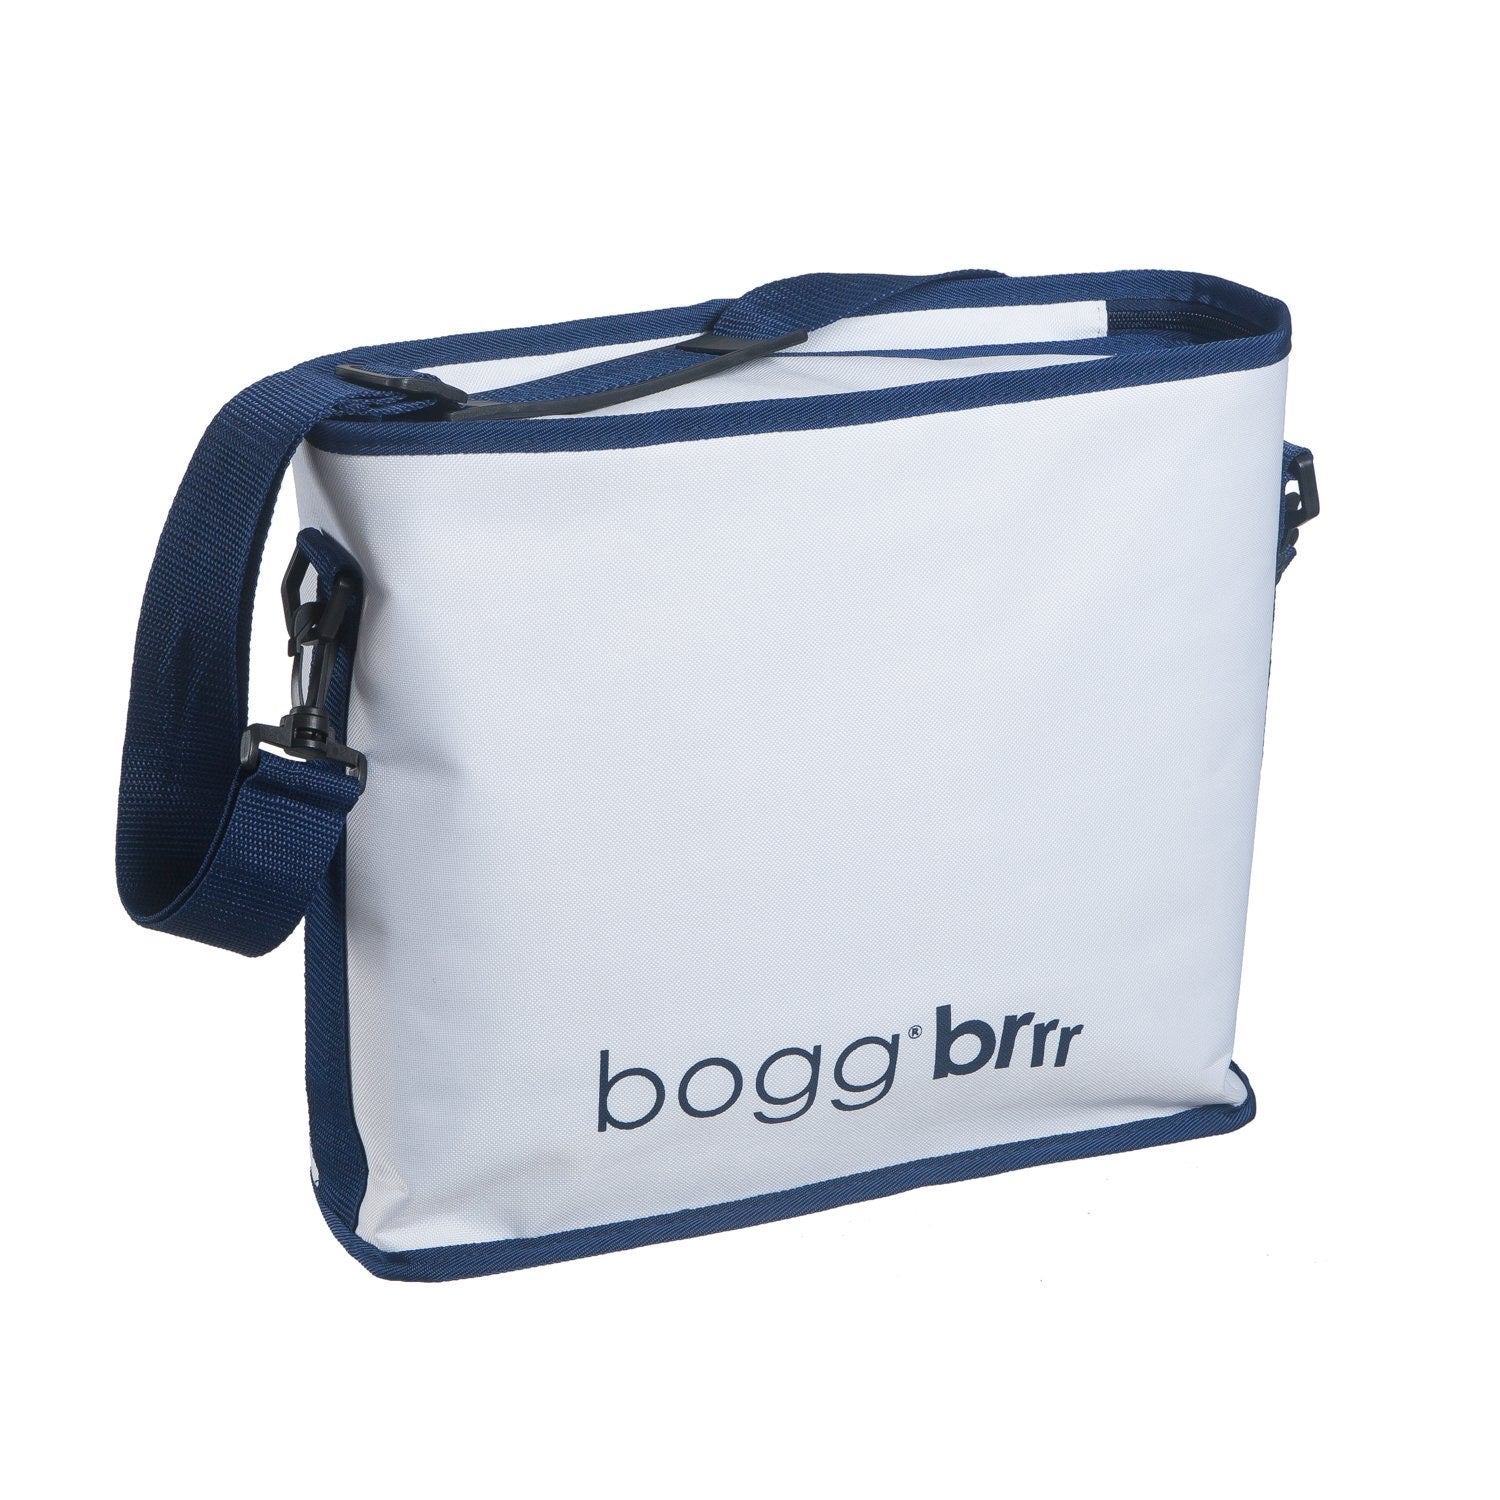 Bogg brrr small white cooler bag